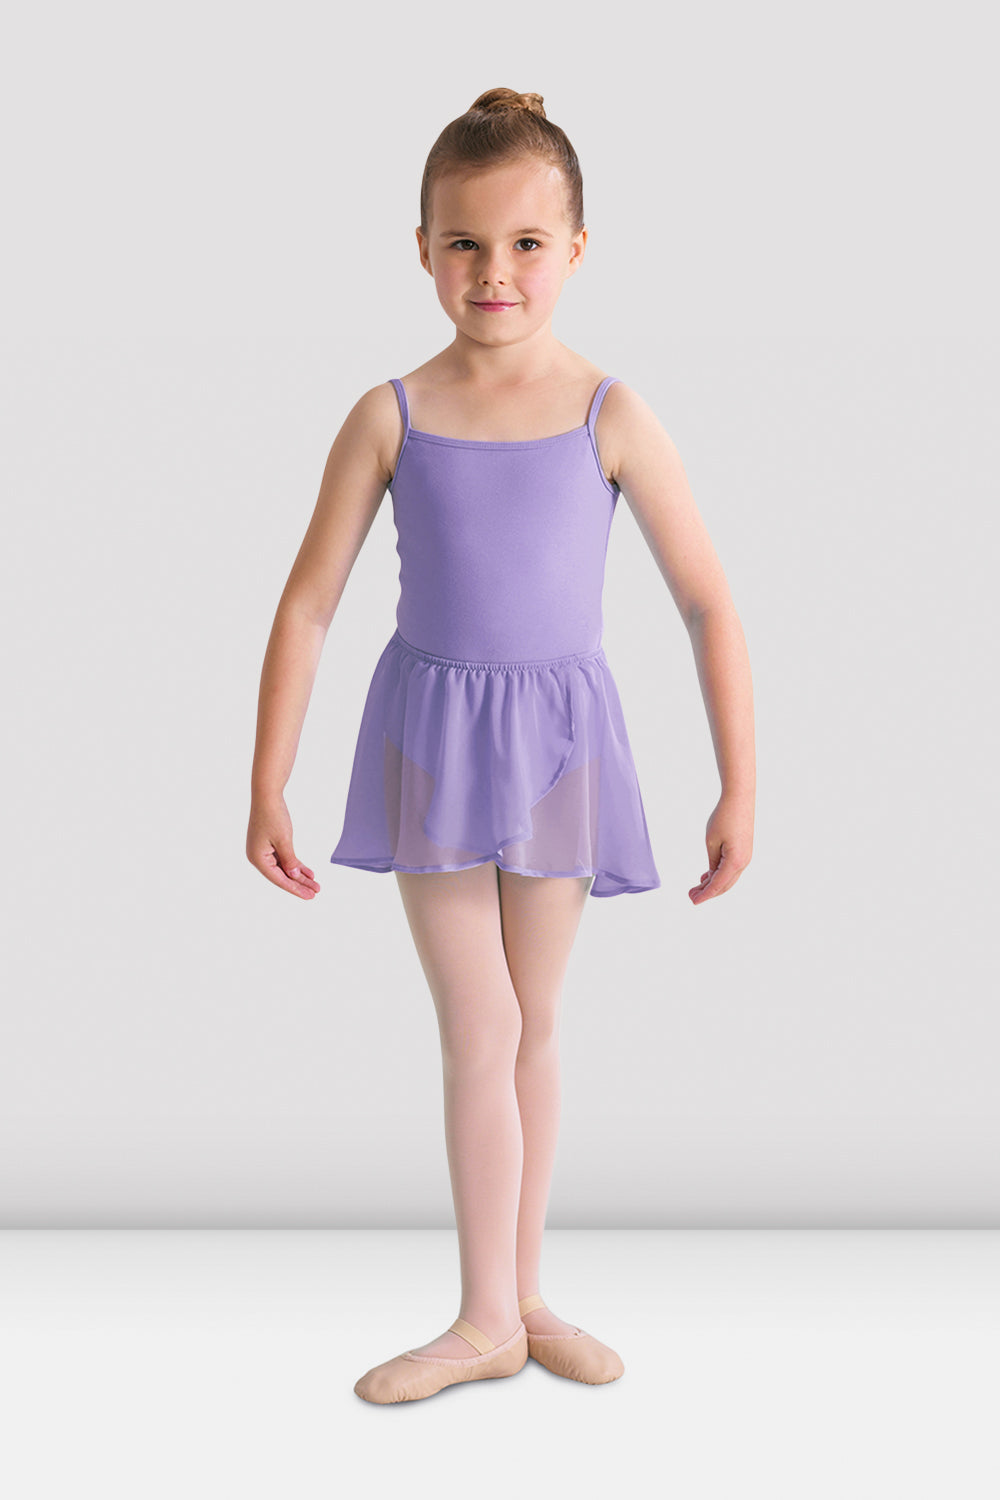 BLOCH Girls Barre Stretch Waist Ballet Skirt, Lavender